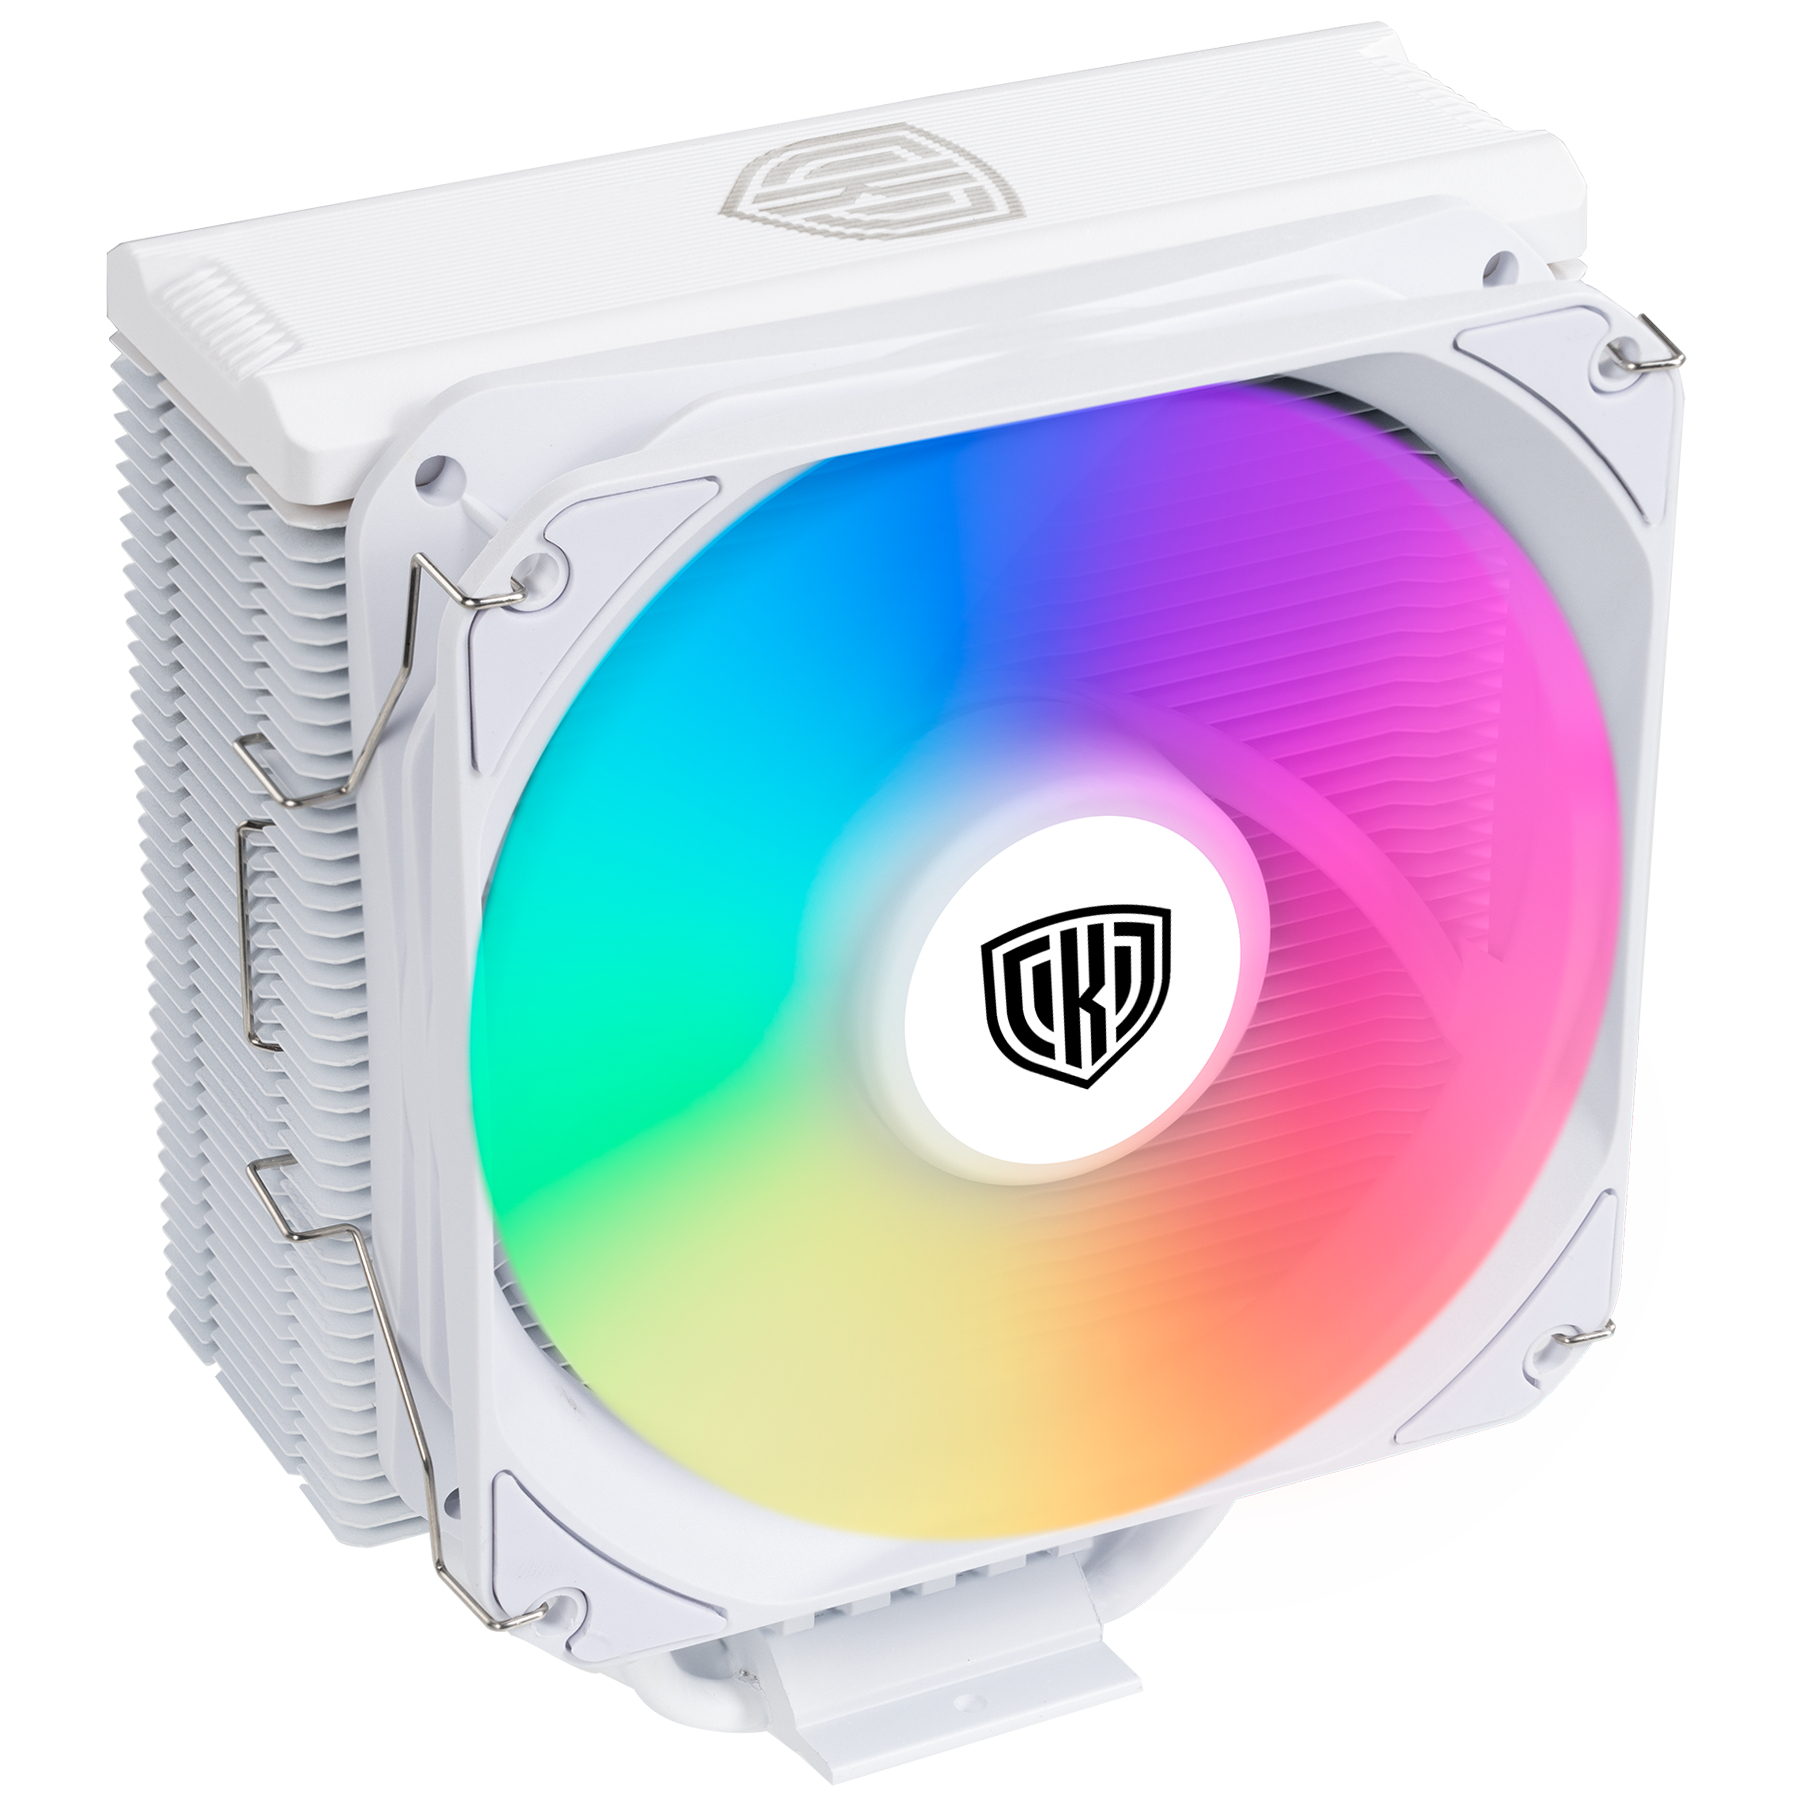 Kolink Umbra EX180 ARGB White CPU Cooler - 120mm